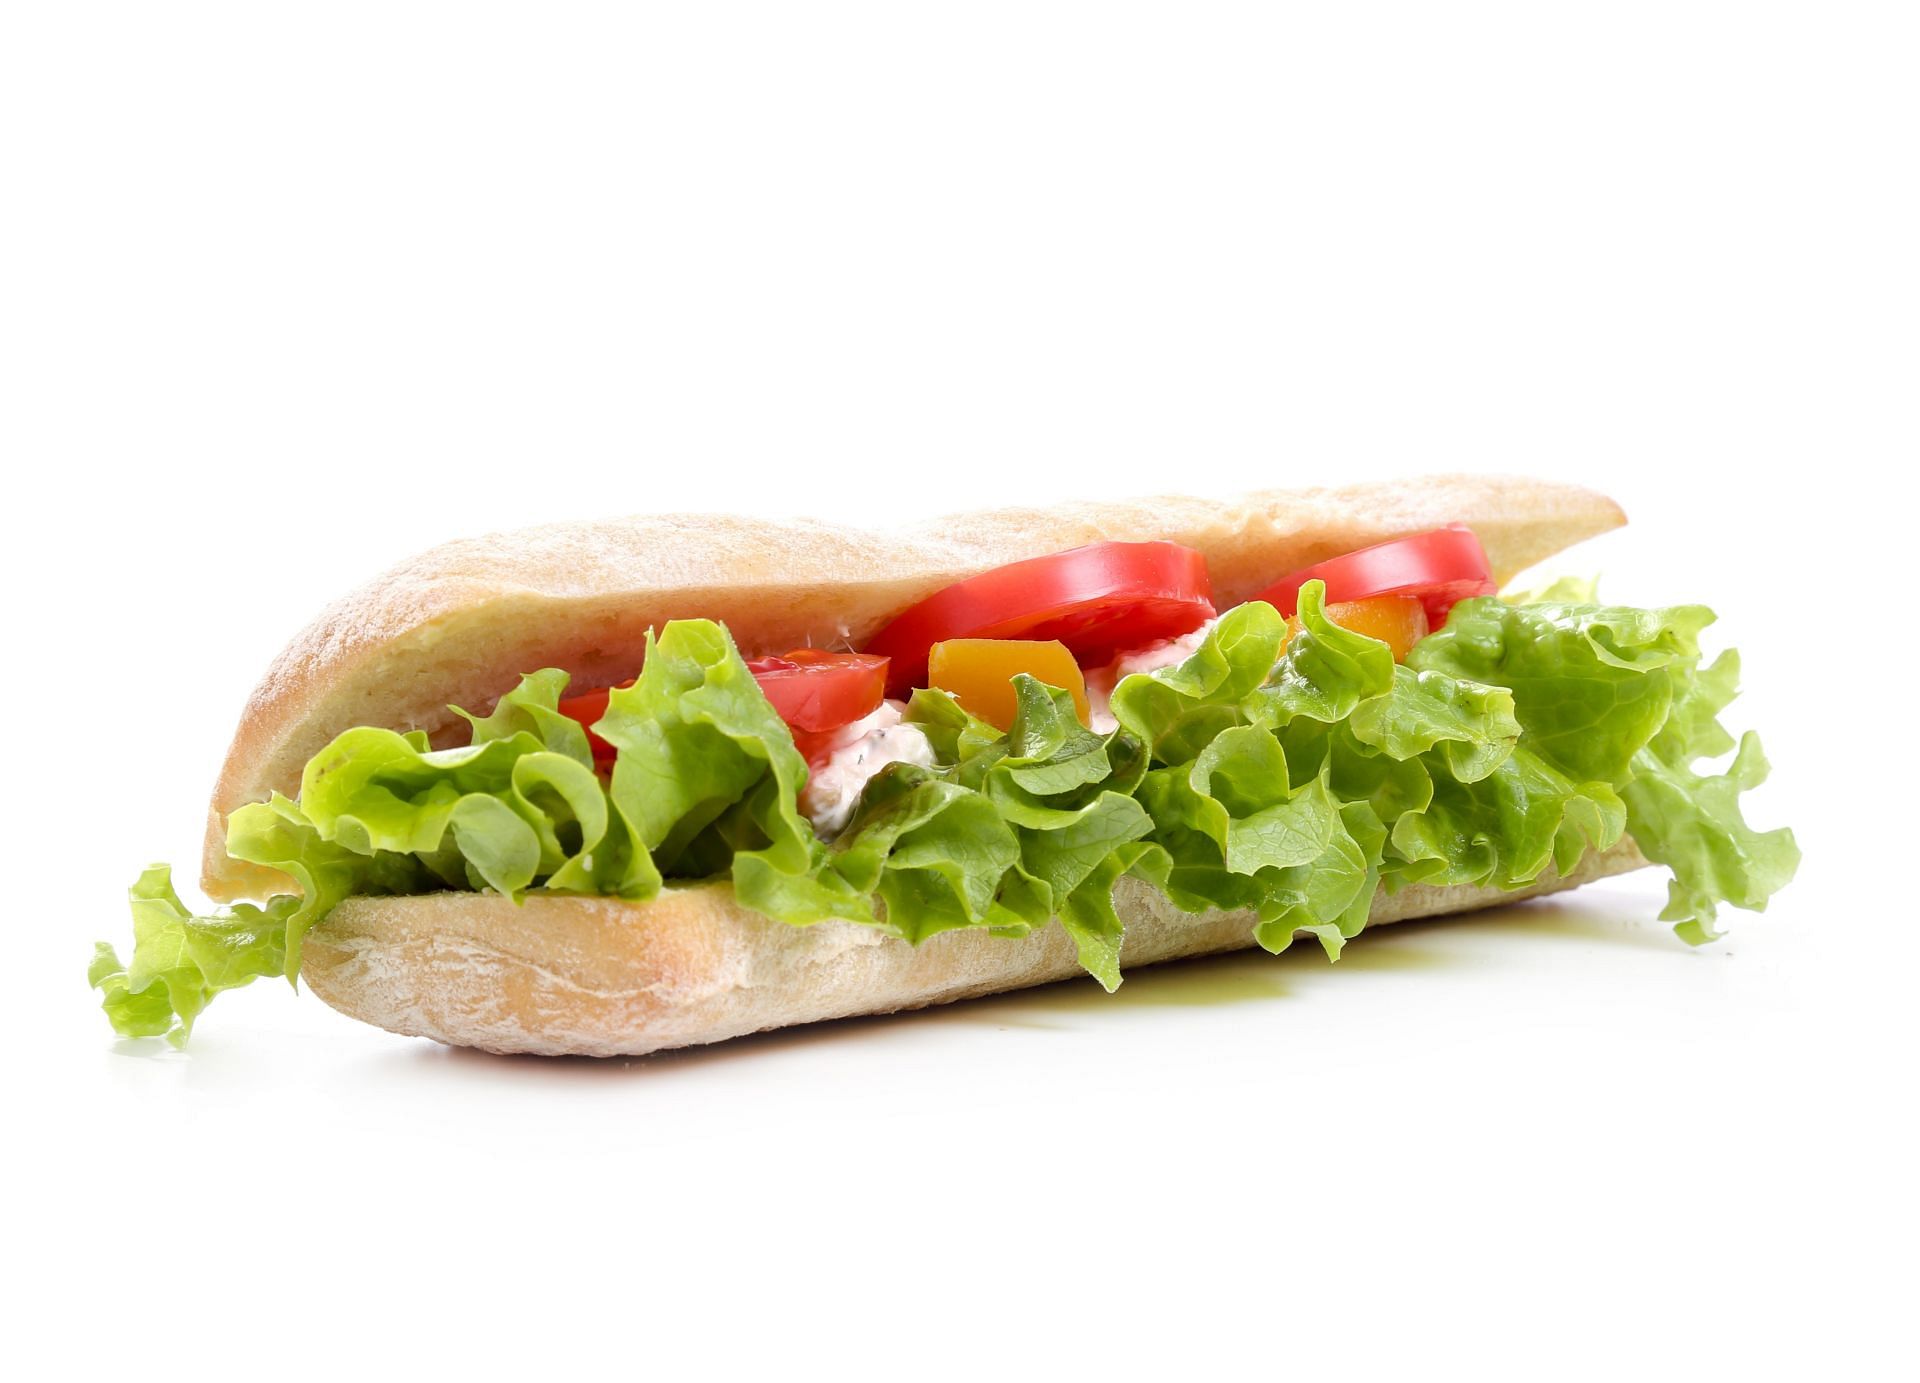 Are breads at Subway healthy? (Image via Freepik/ Racool_studio )